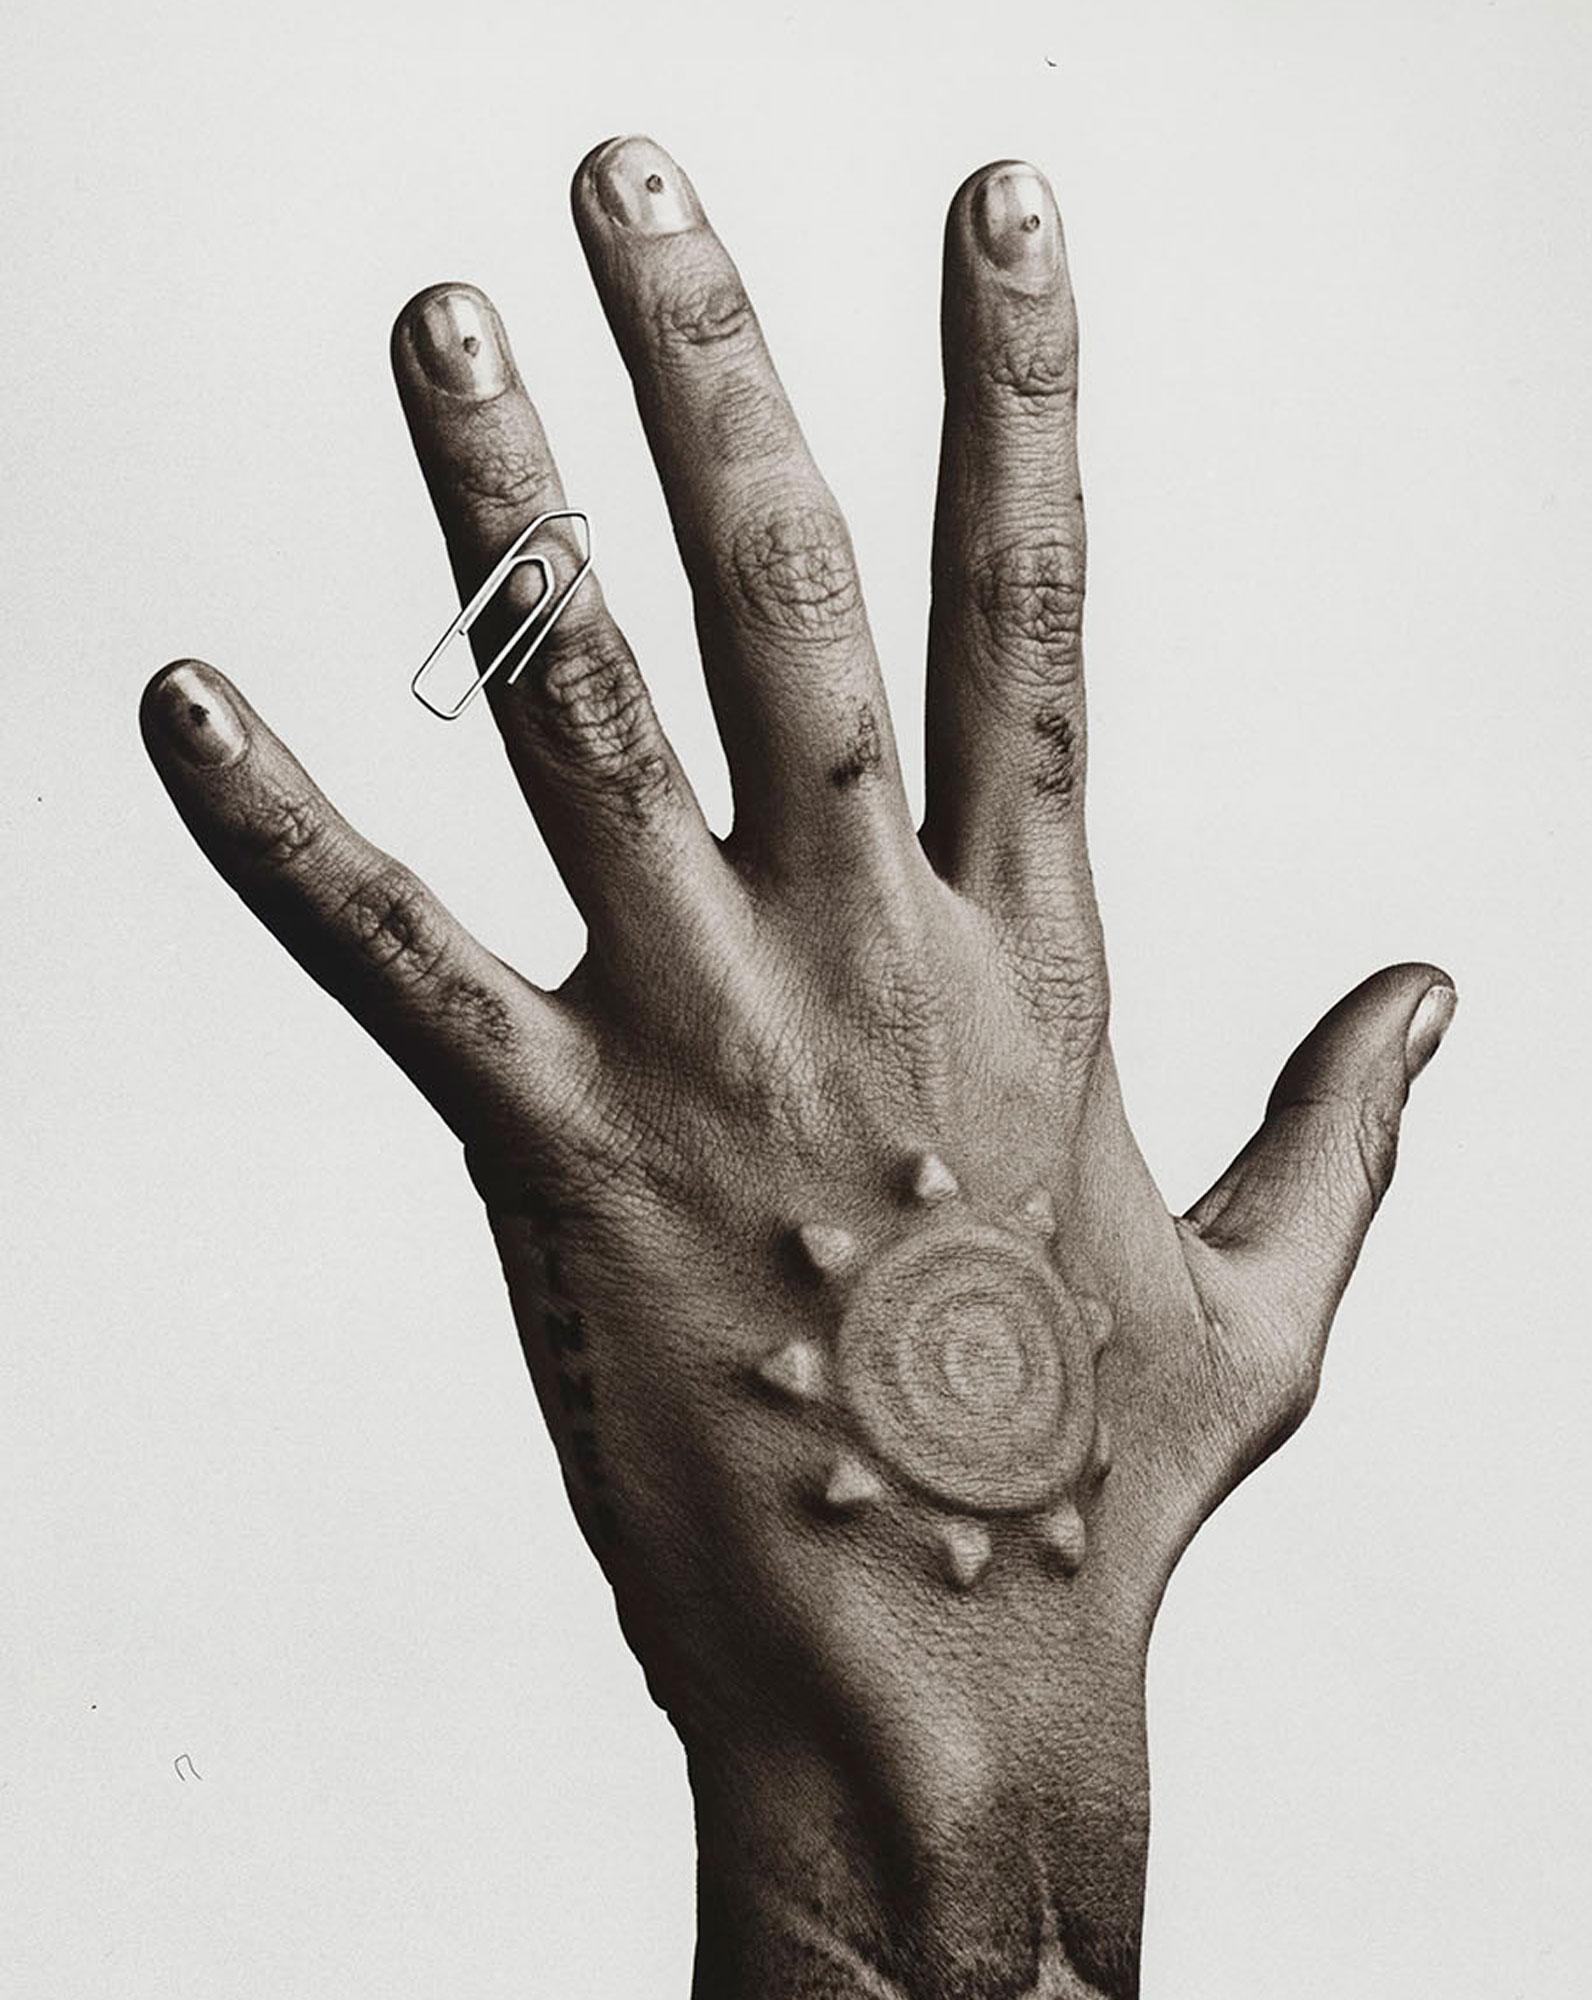 Hand II, Russia - Photograph by Jan C. Schlegel